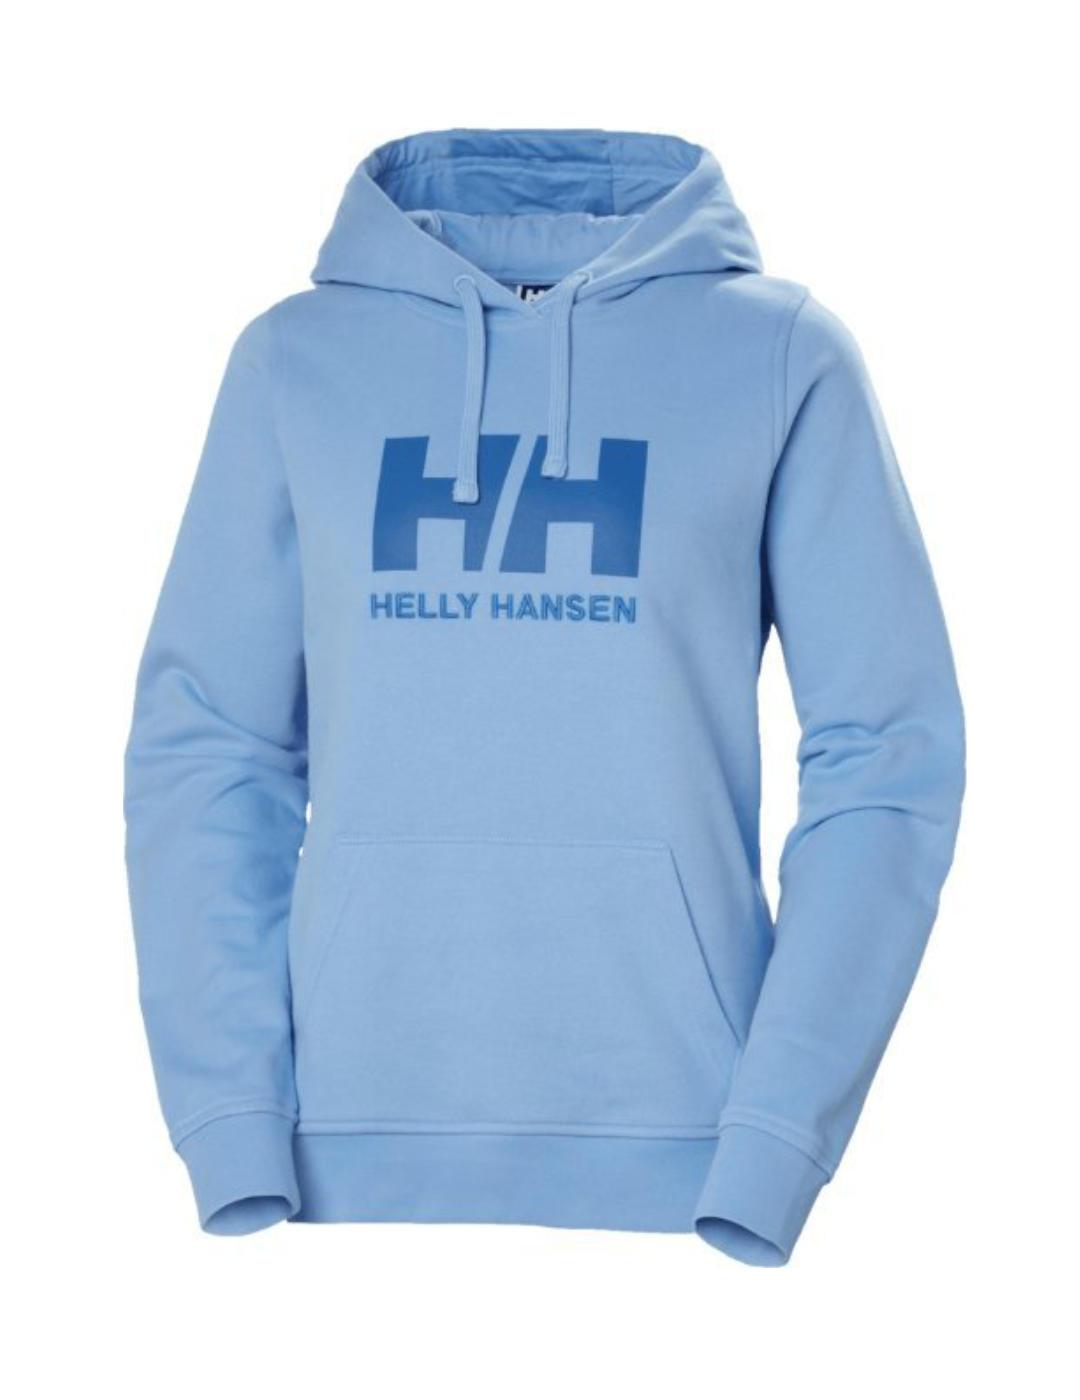 Sudadera Helly Hansen logo azul con capucha para mujer